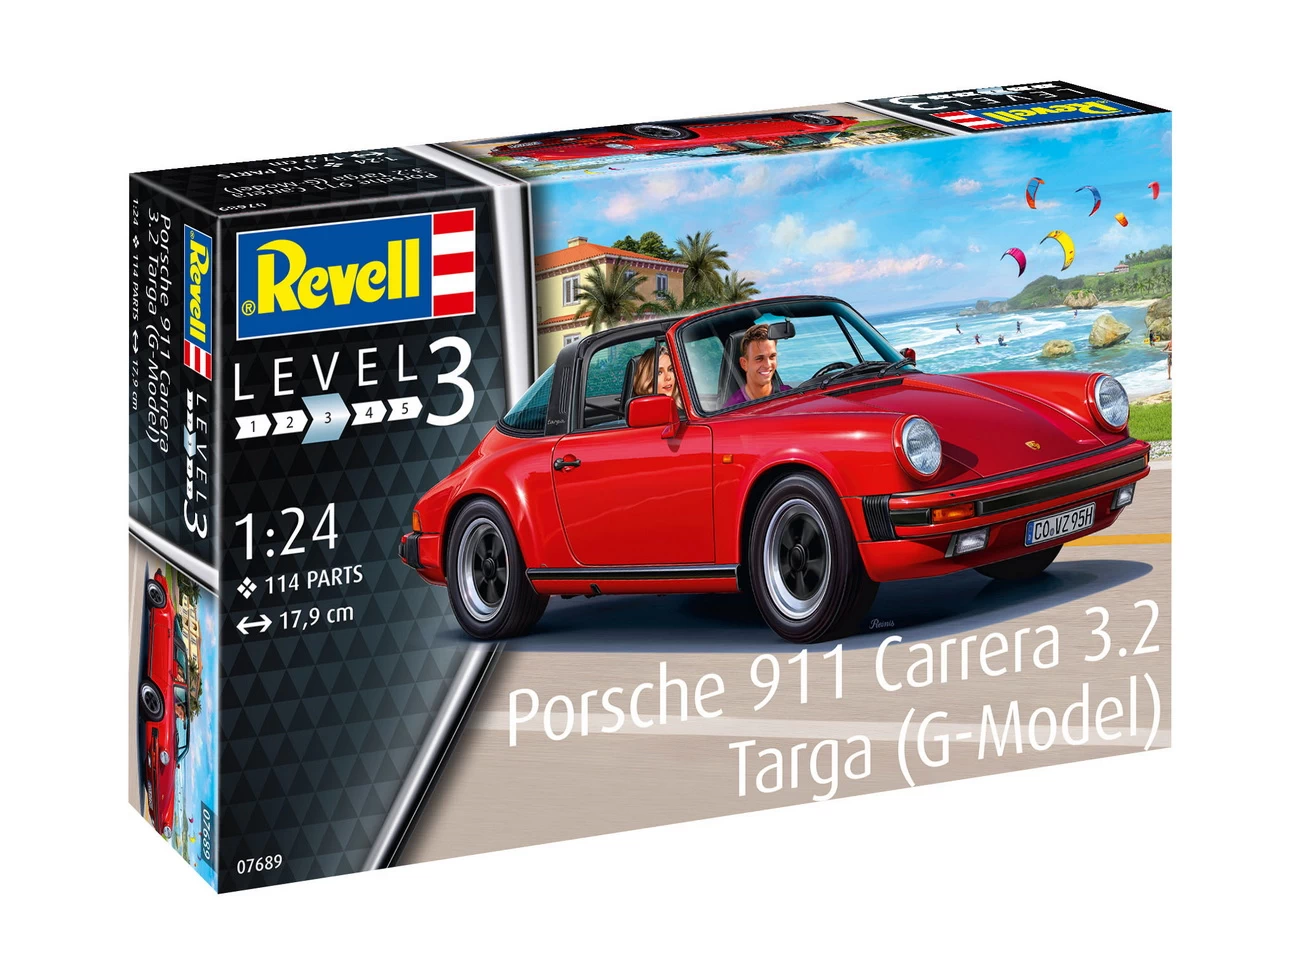 Revell 07689 - Porsche 911 Carrera 3.2 Targa G-Model - Auto Modell